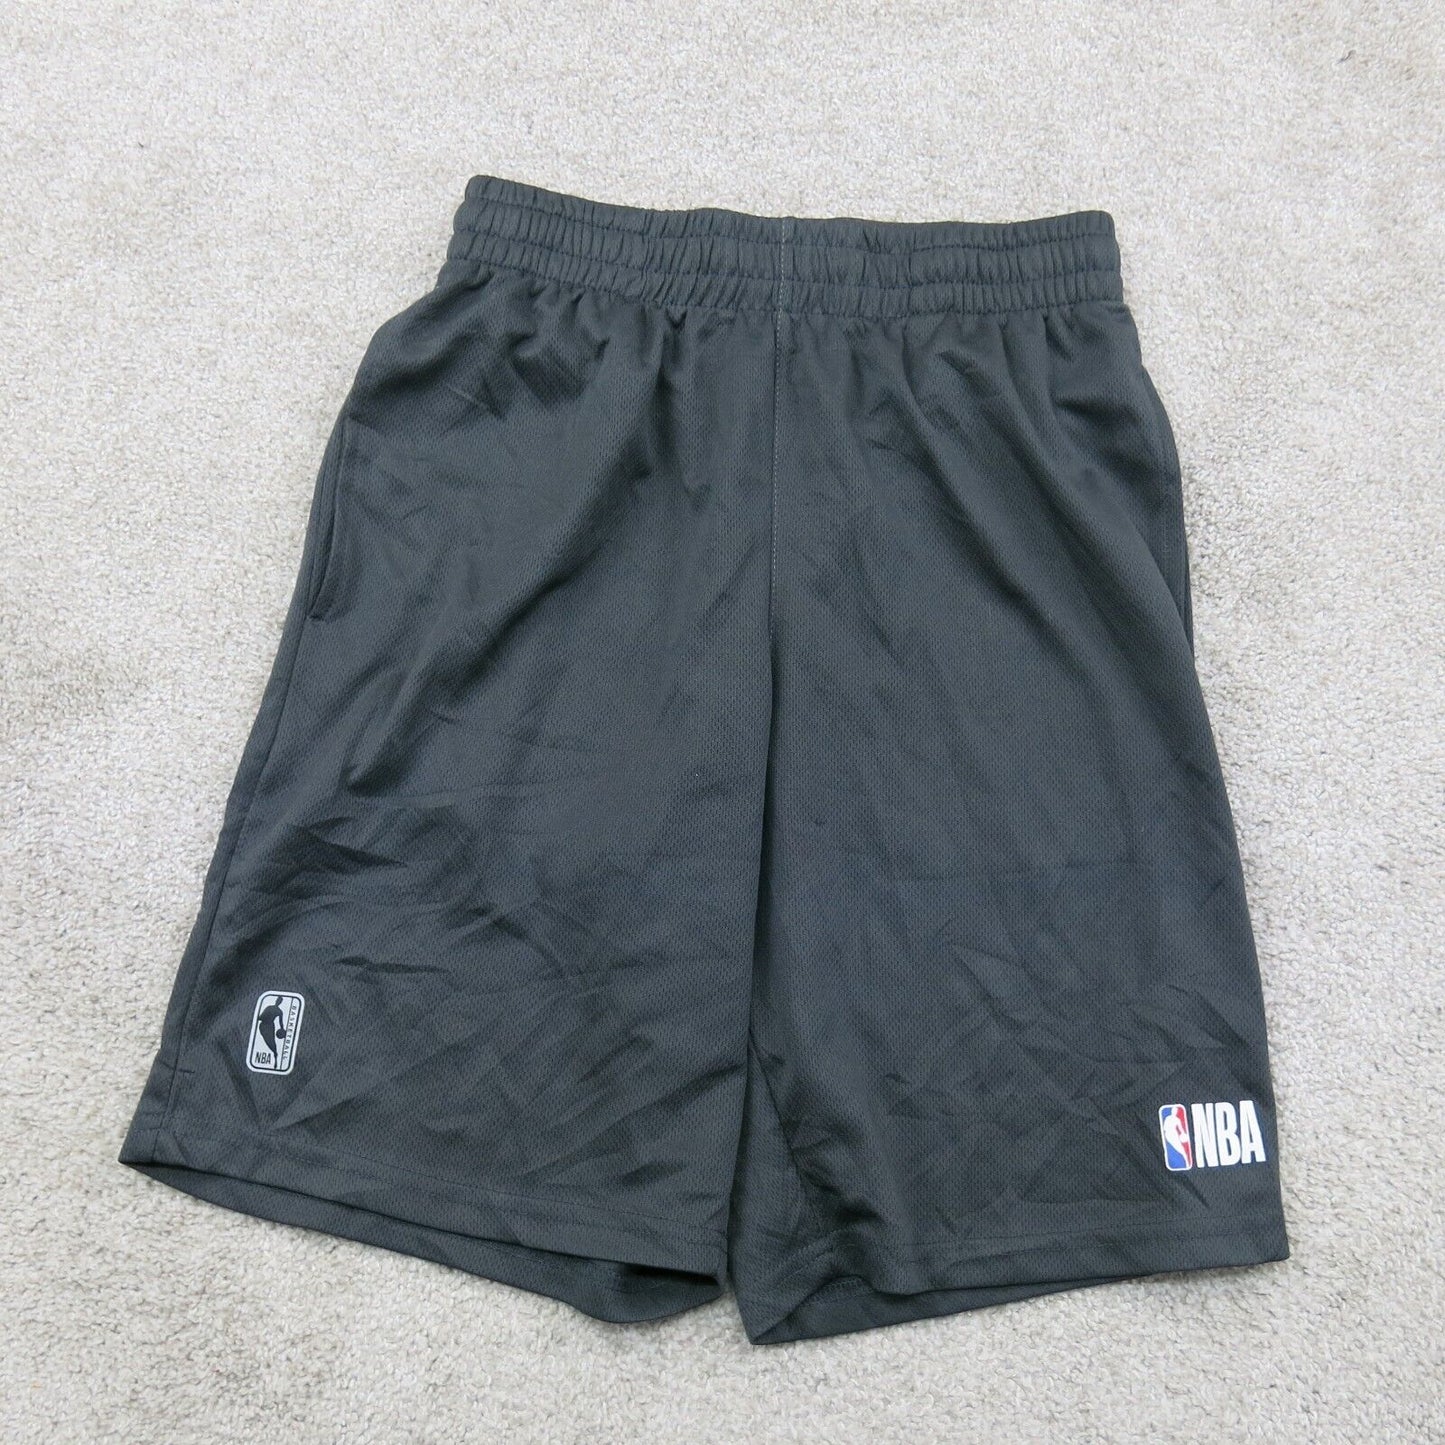 NBA Mens Athletic Shorts Sports/Bsketball Elastic Waist Gray Size Small